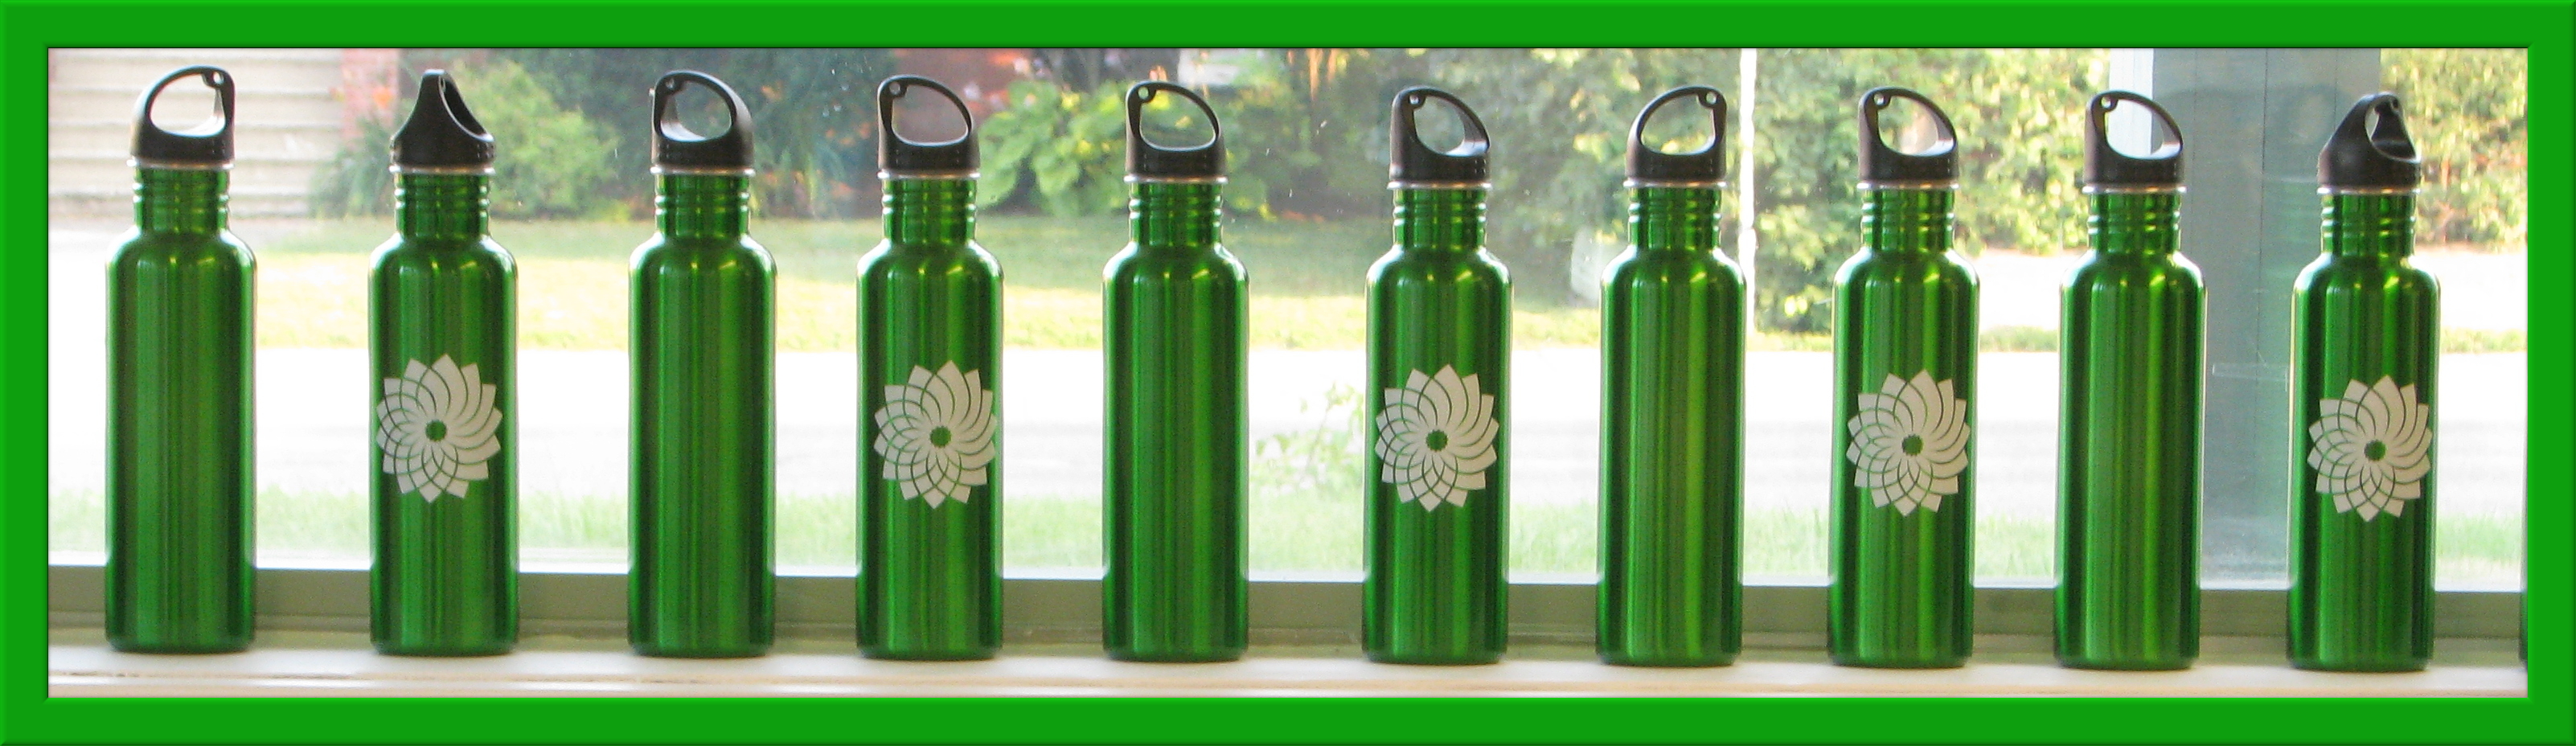 green-water-bottles_9477